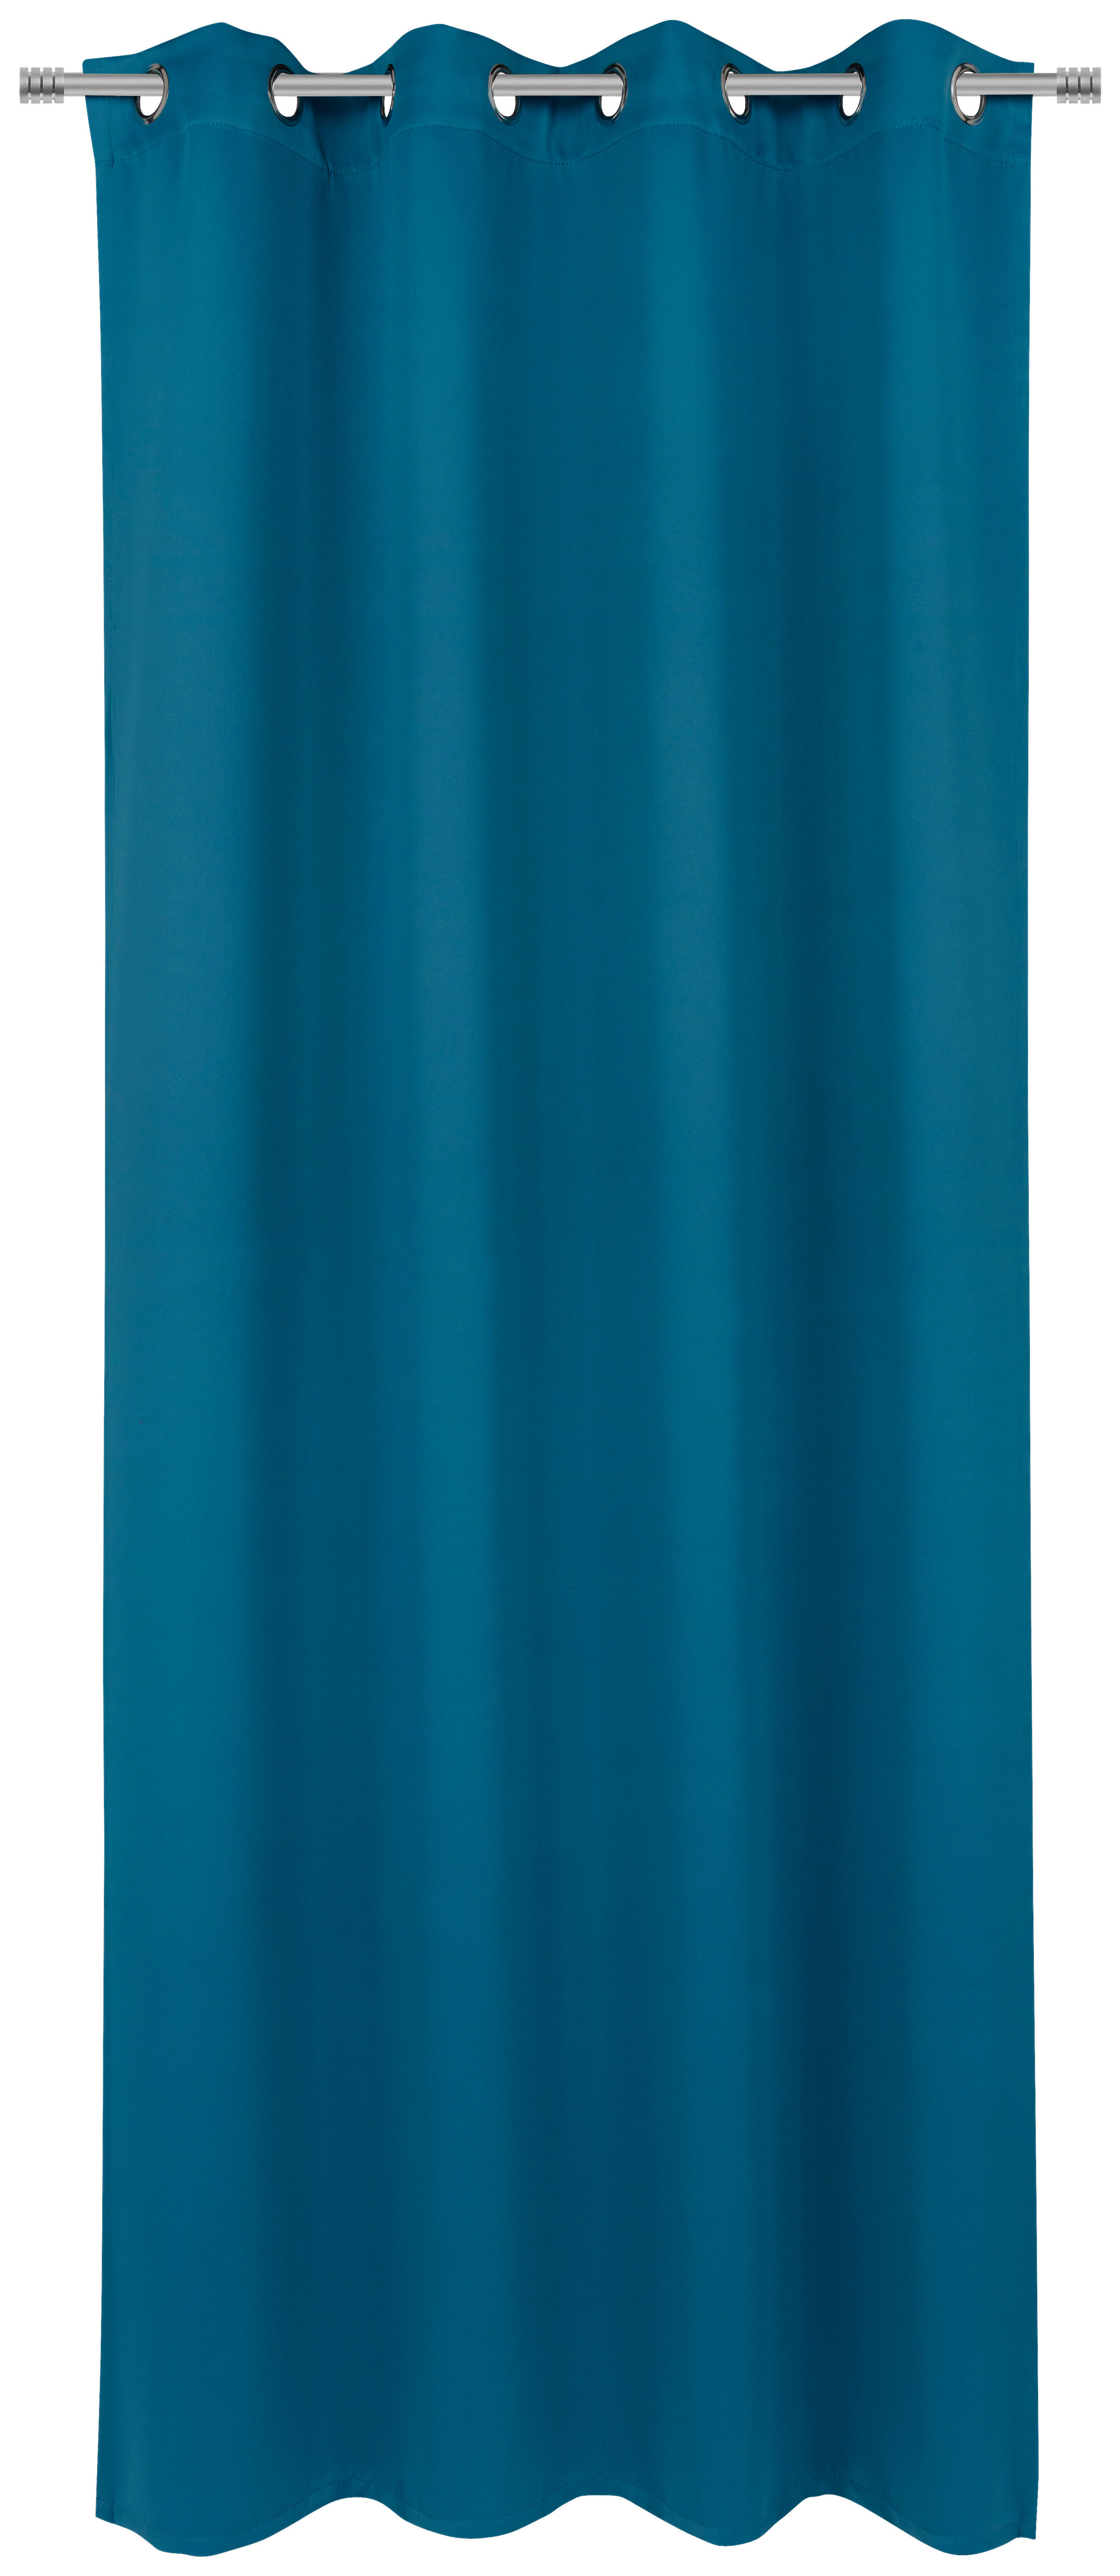 GARDINLÄNGD mörkläggning  - mörkblå, Basics, textil (140/245cm) - Esposa